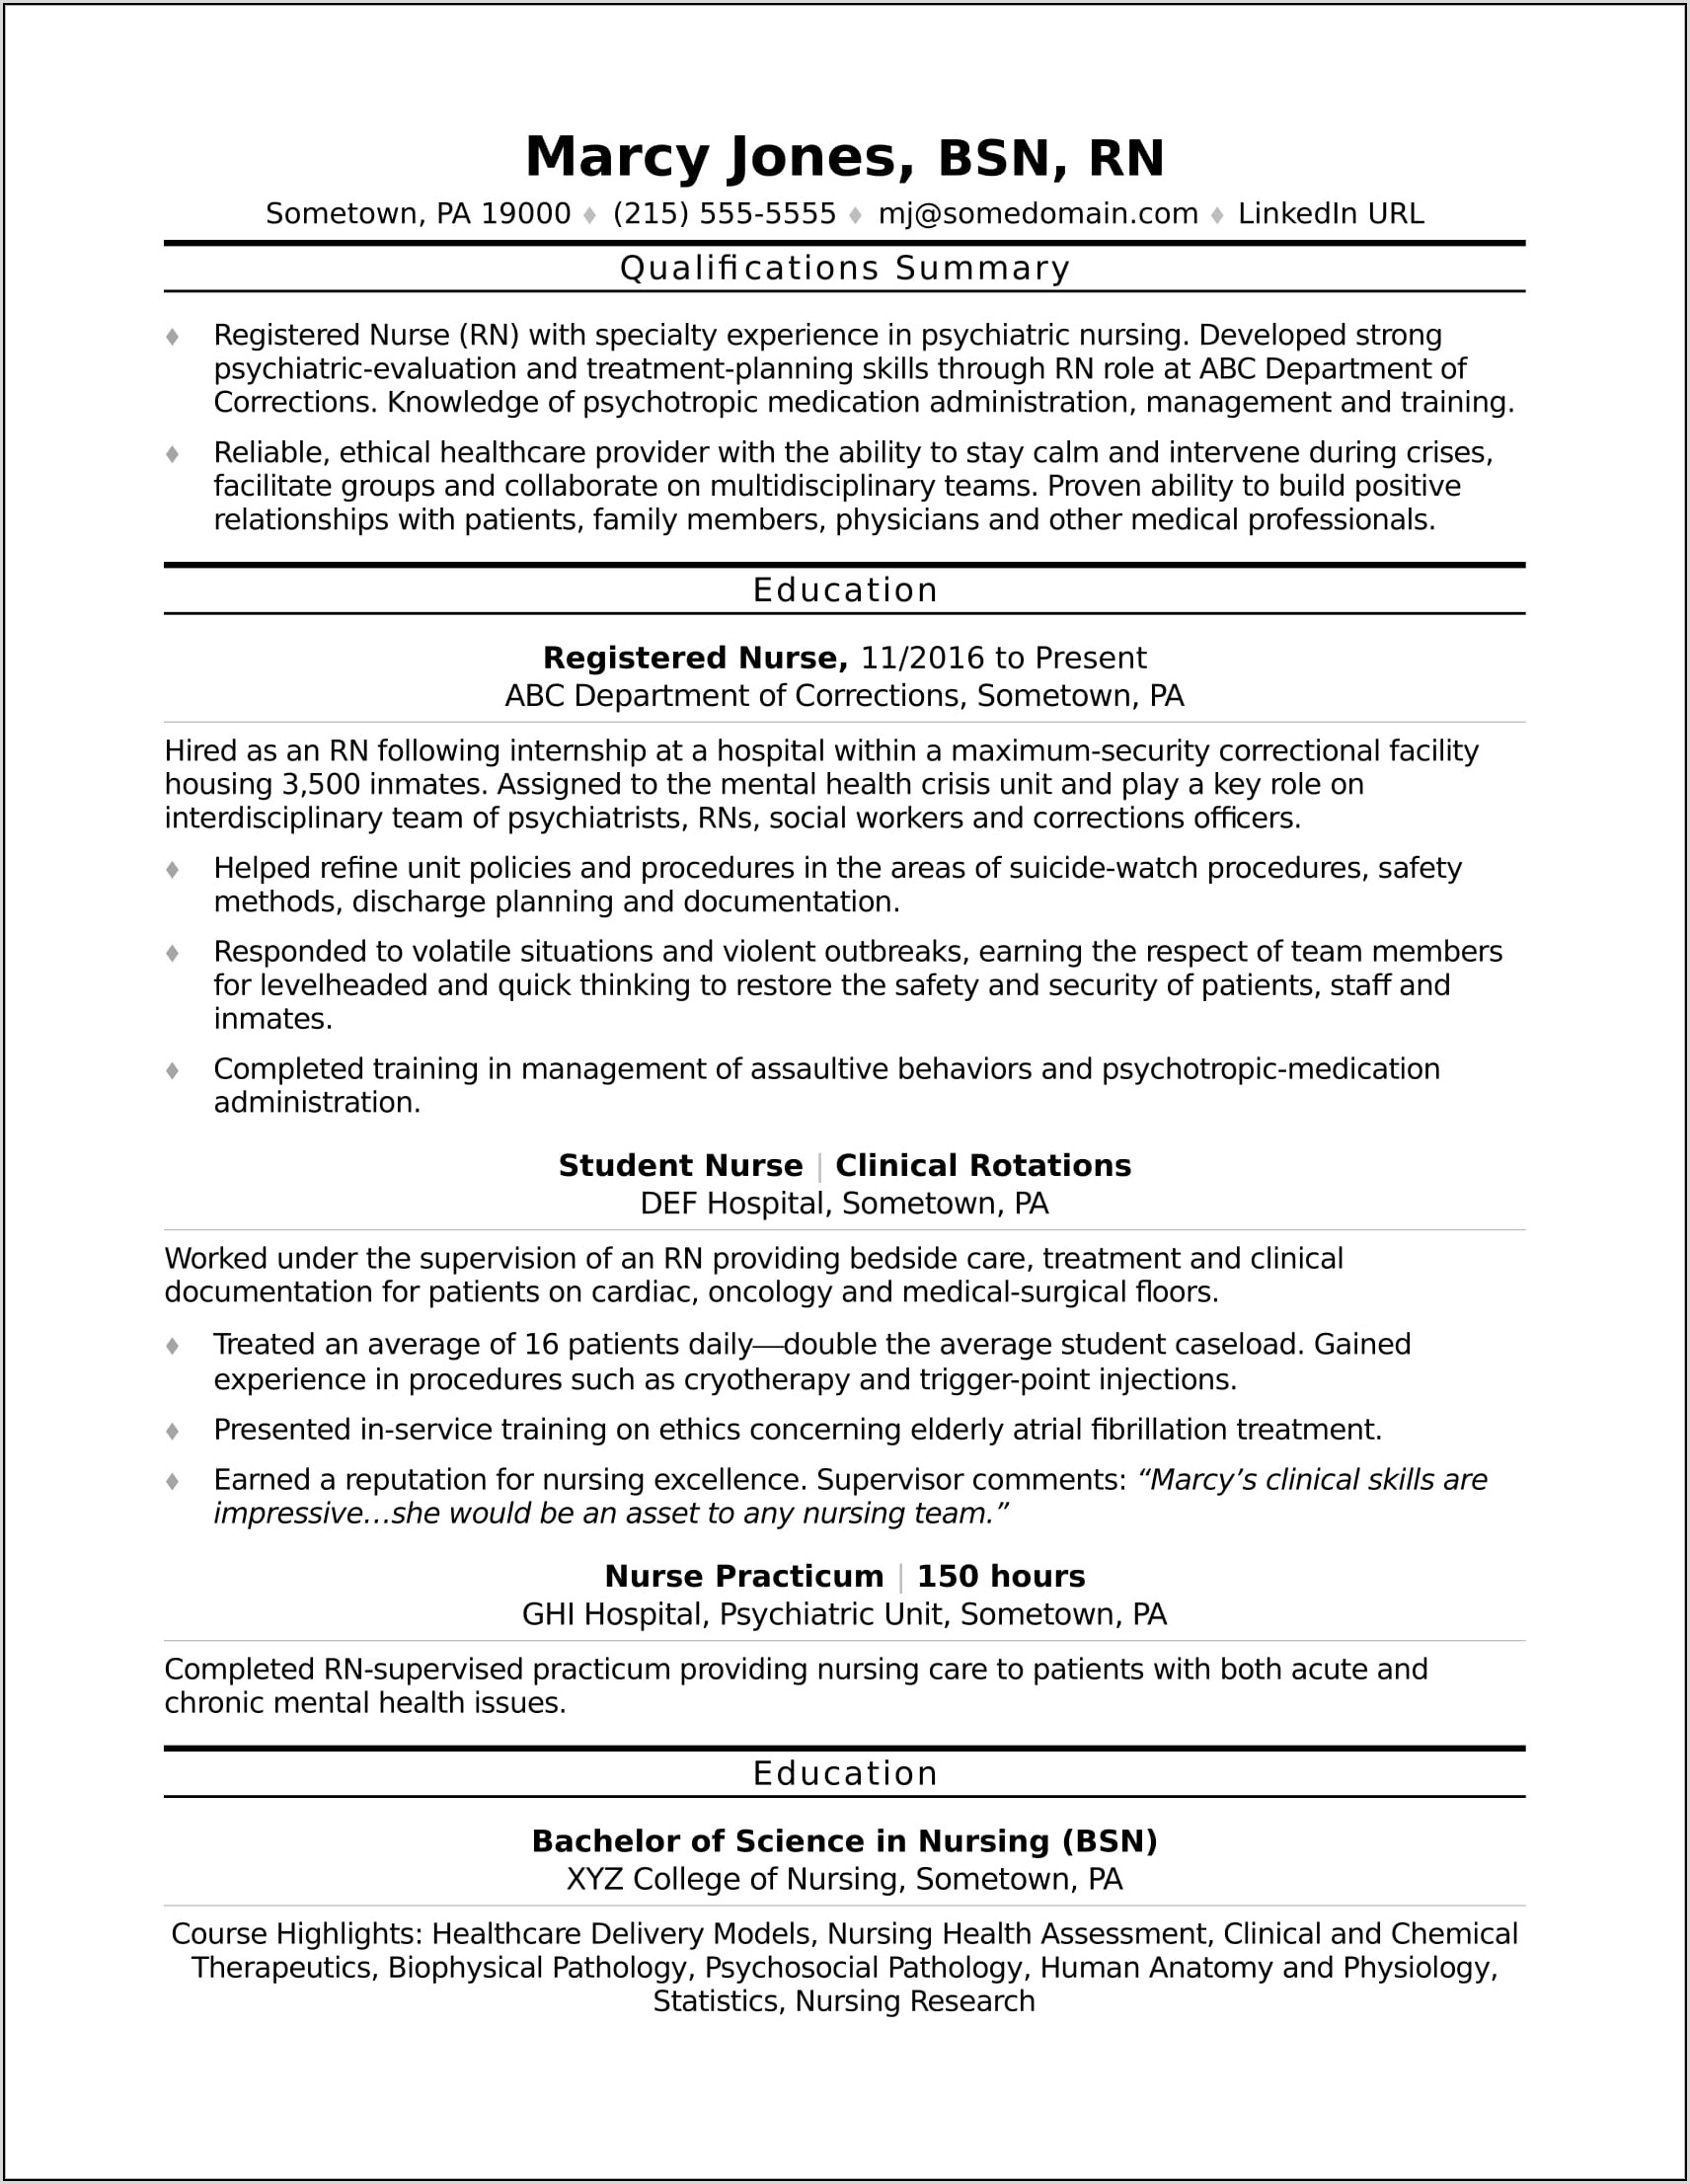 Resume Templates For Registered Nurses